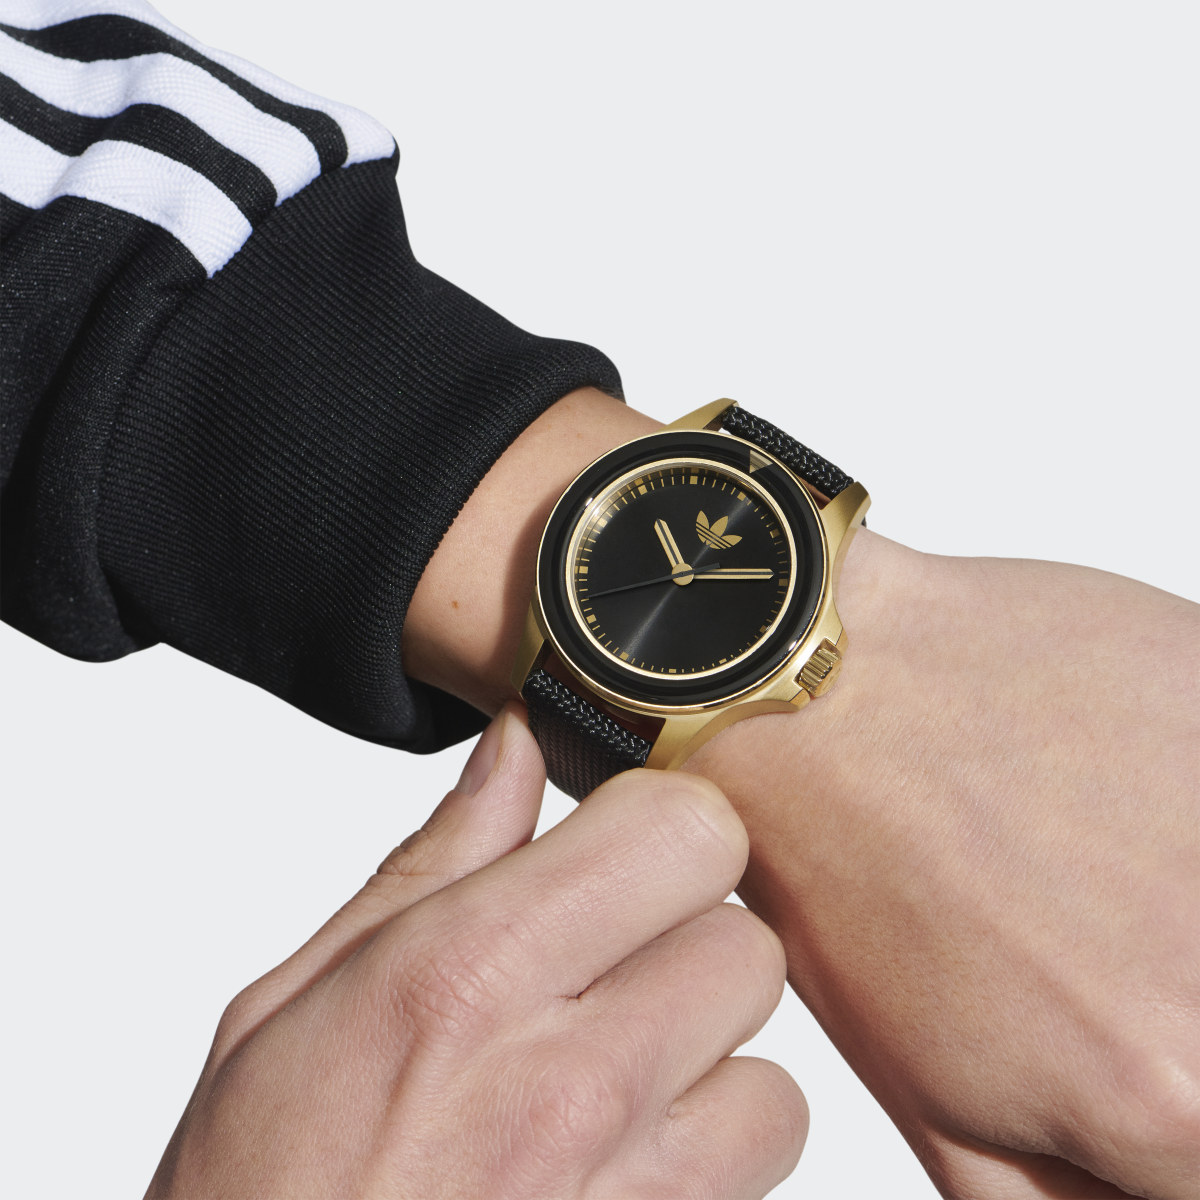 Adidas Expression One Watch. 7